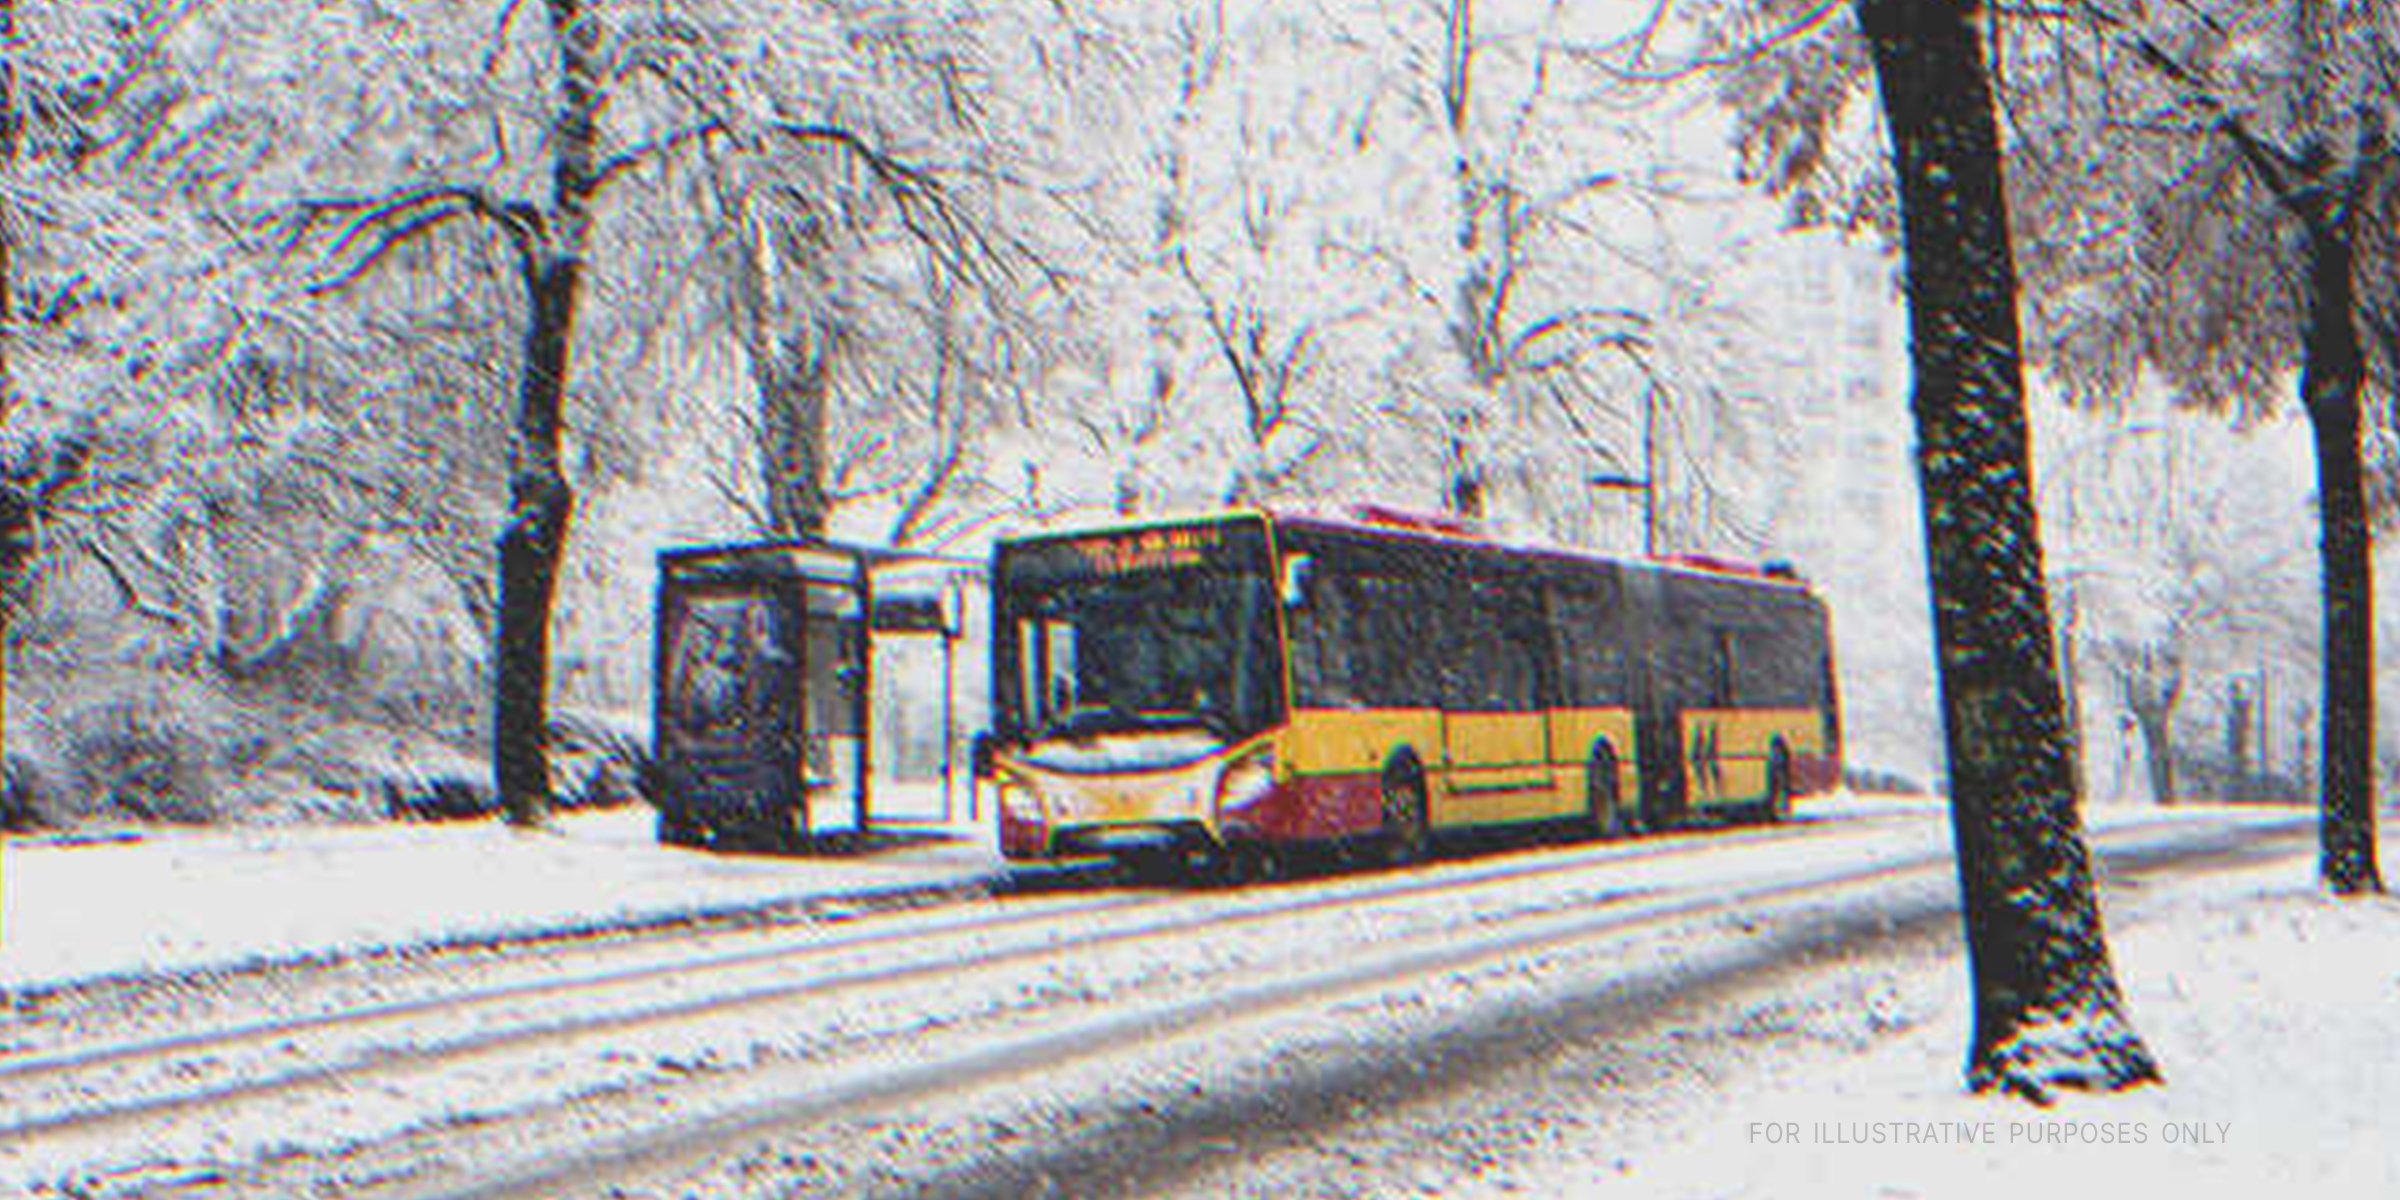 Bus on a snowy road. | Source: Shutterstock